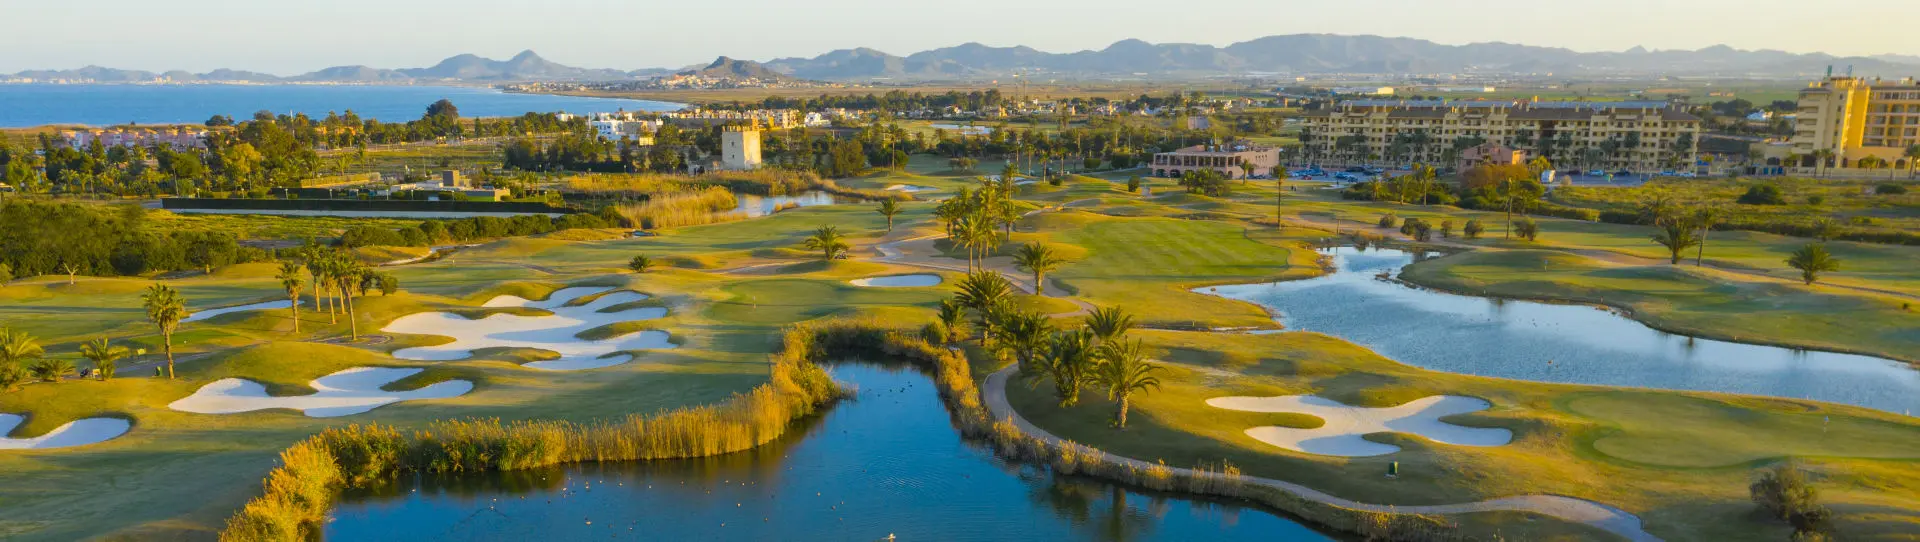 Spain golf courses - La Serena Golf Course - Photo 3